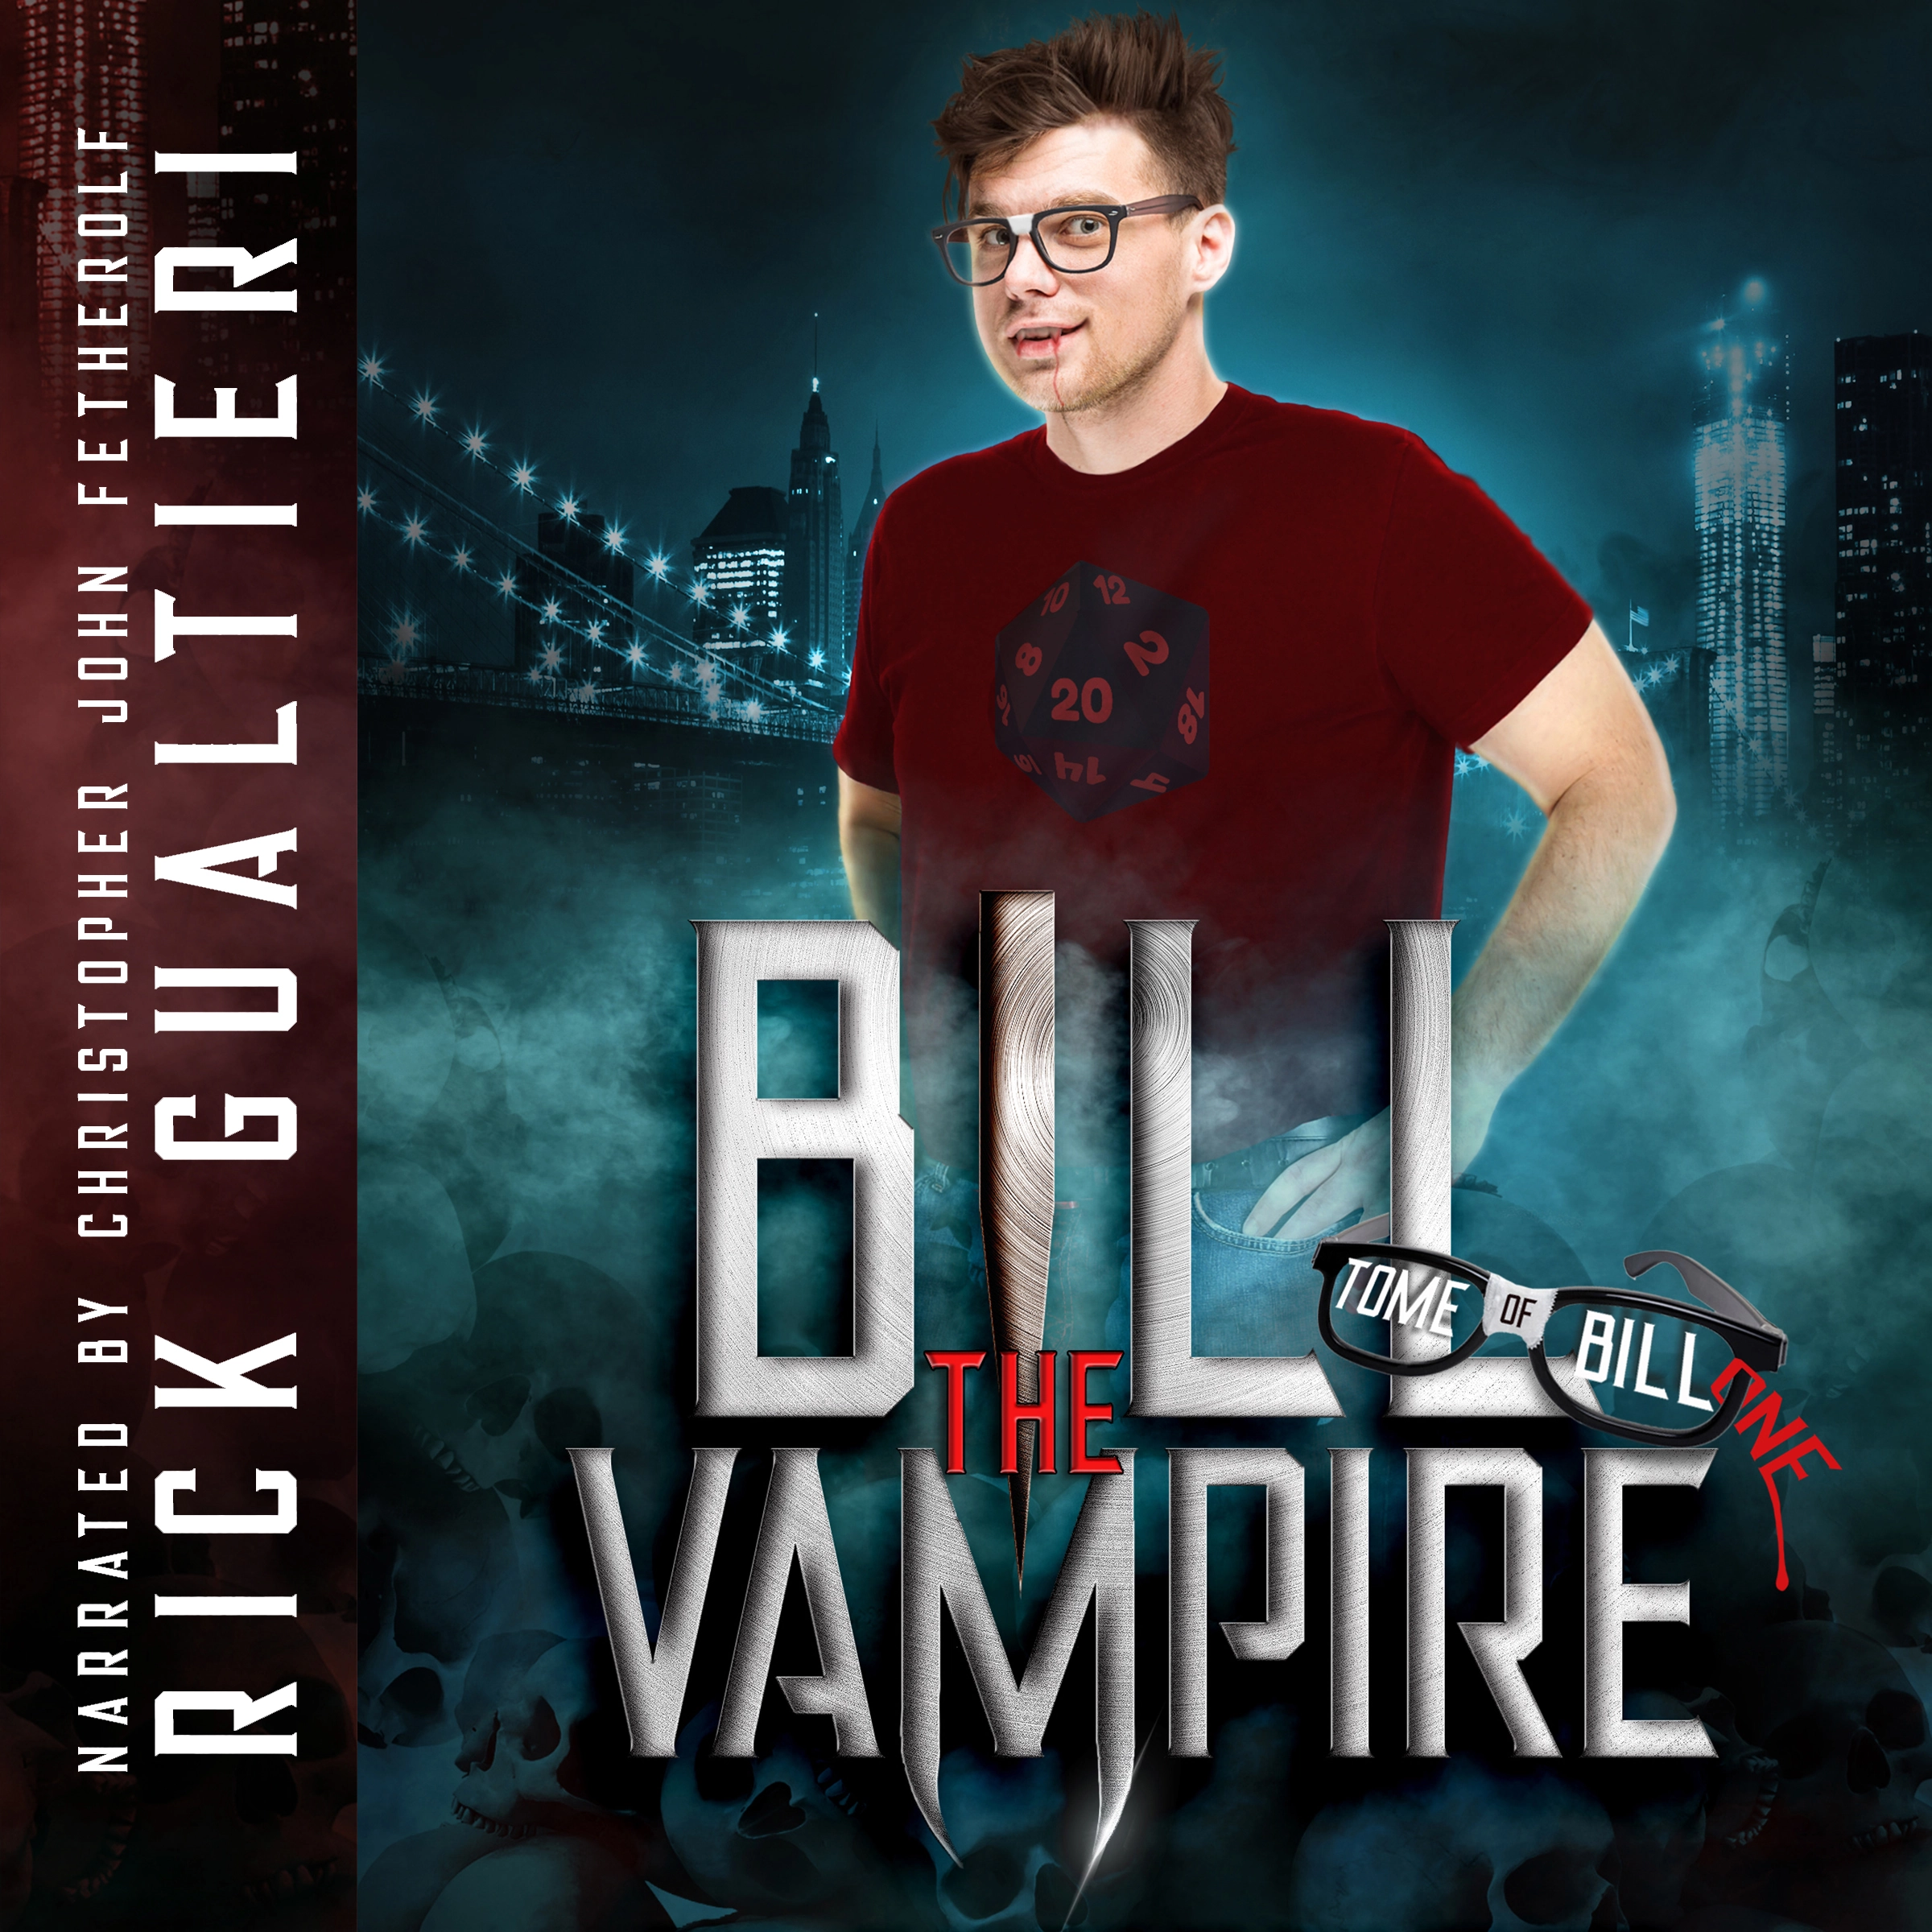 Bill The Vampire Audiobook by Rick Gualtieri